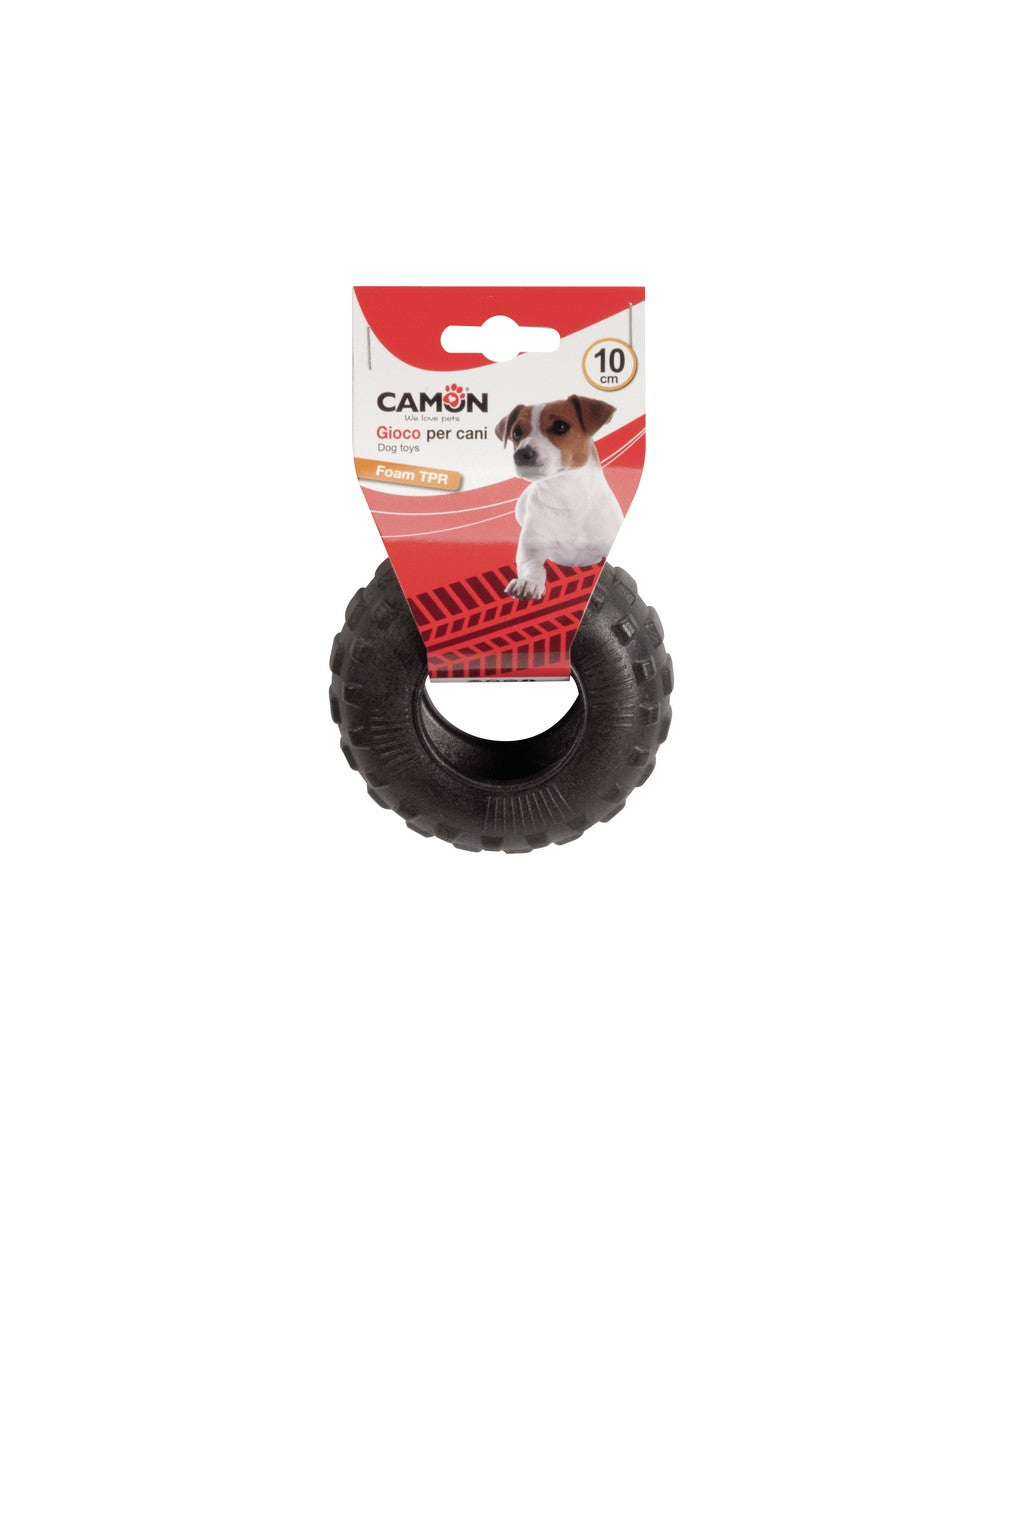 Camon Gioco per cani - pneumatici in foam TPR - AD0200